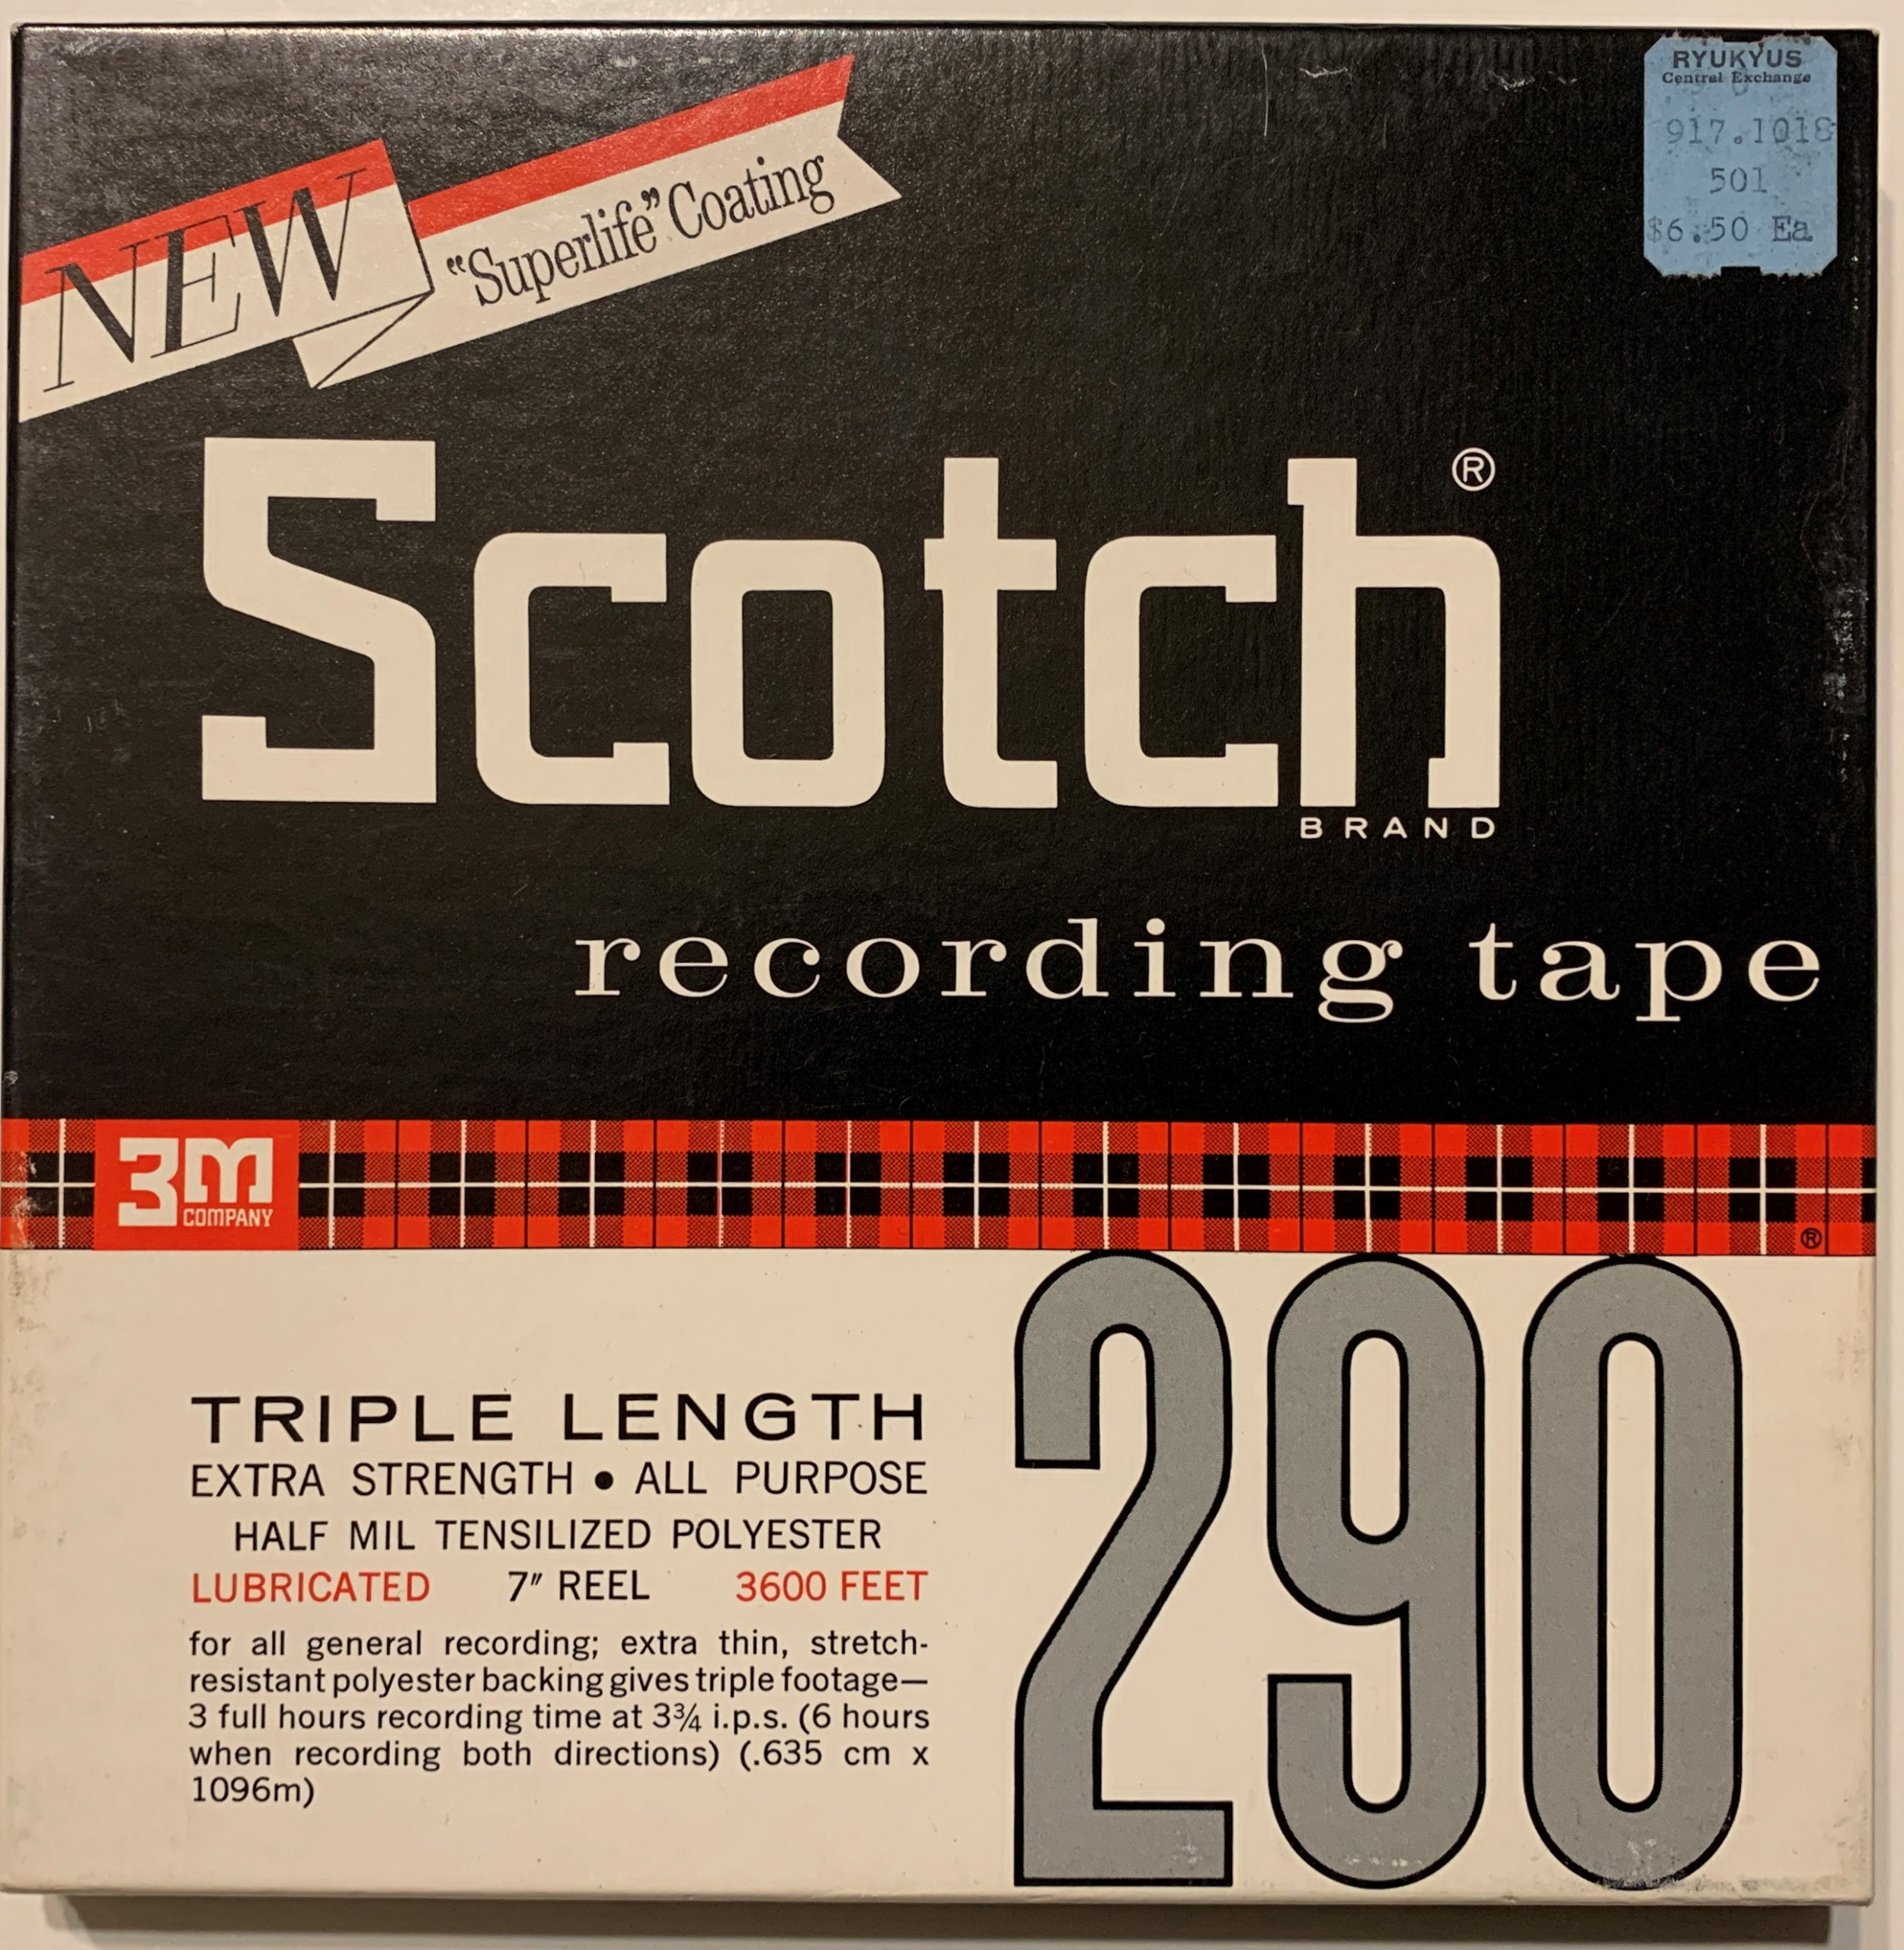 https://reeltoreelwarehouse.com/wp-content/uploads/2020/12/Scotch-290-Reel-Tape-Box-scaled.jpg